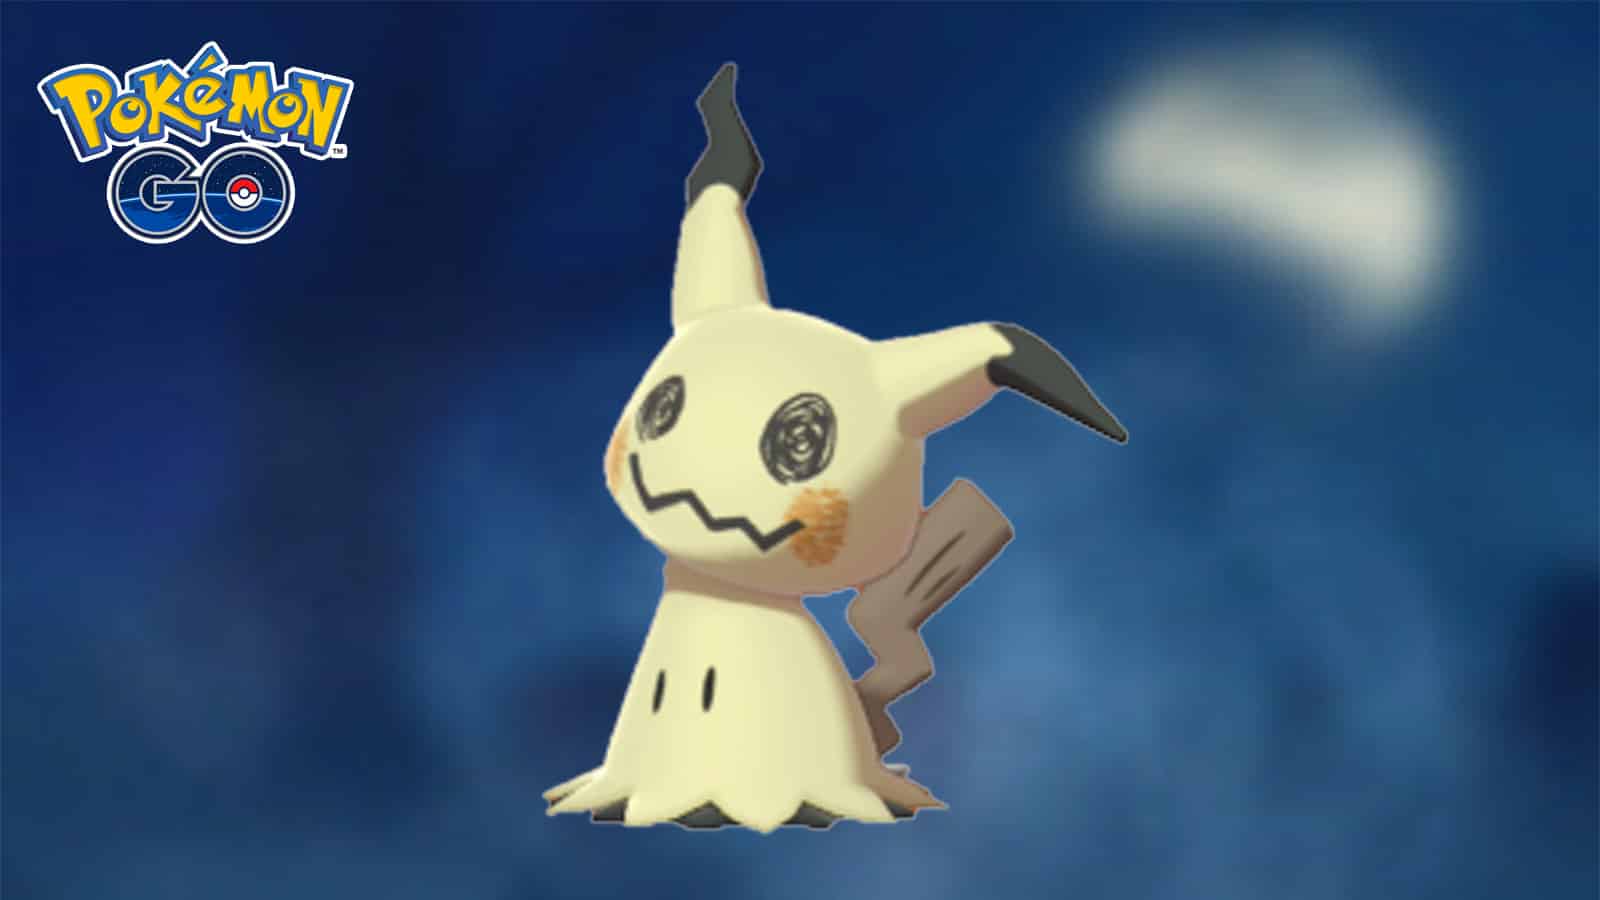 Mimikyu appearing in Pokemon Go